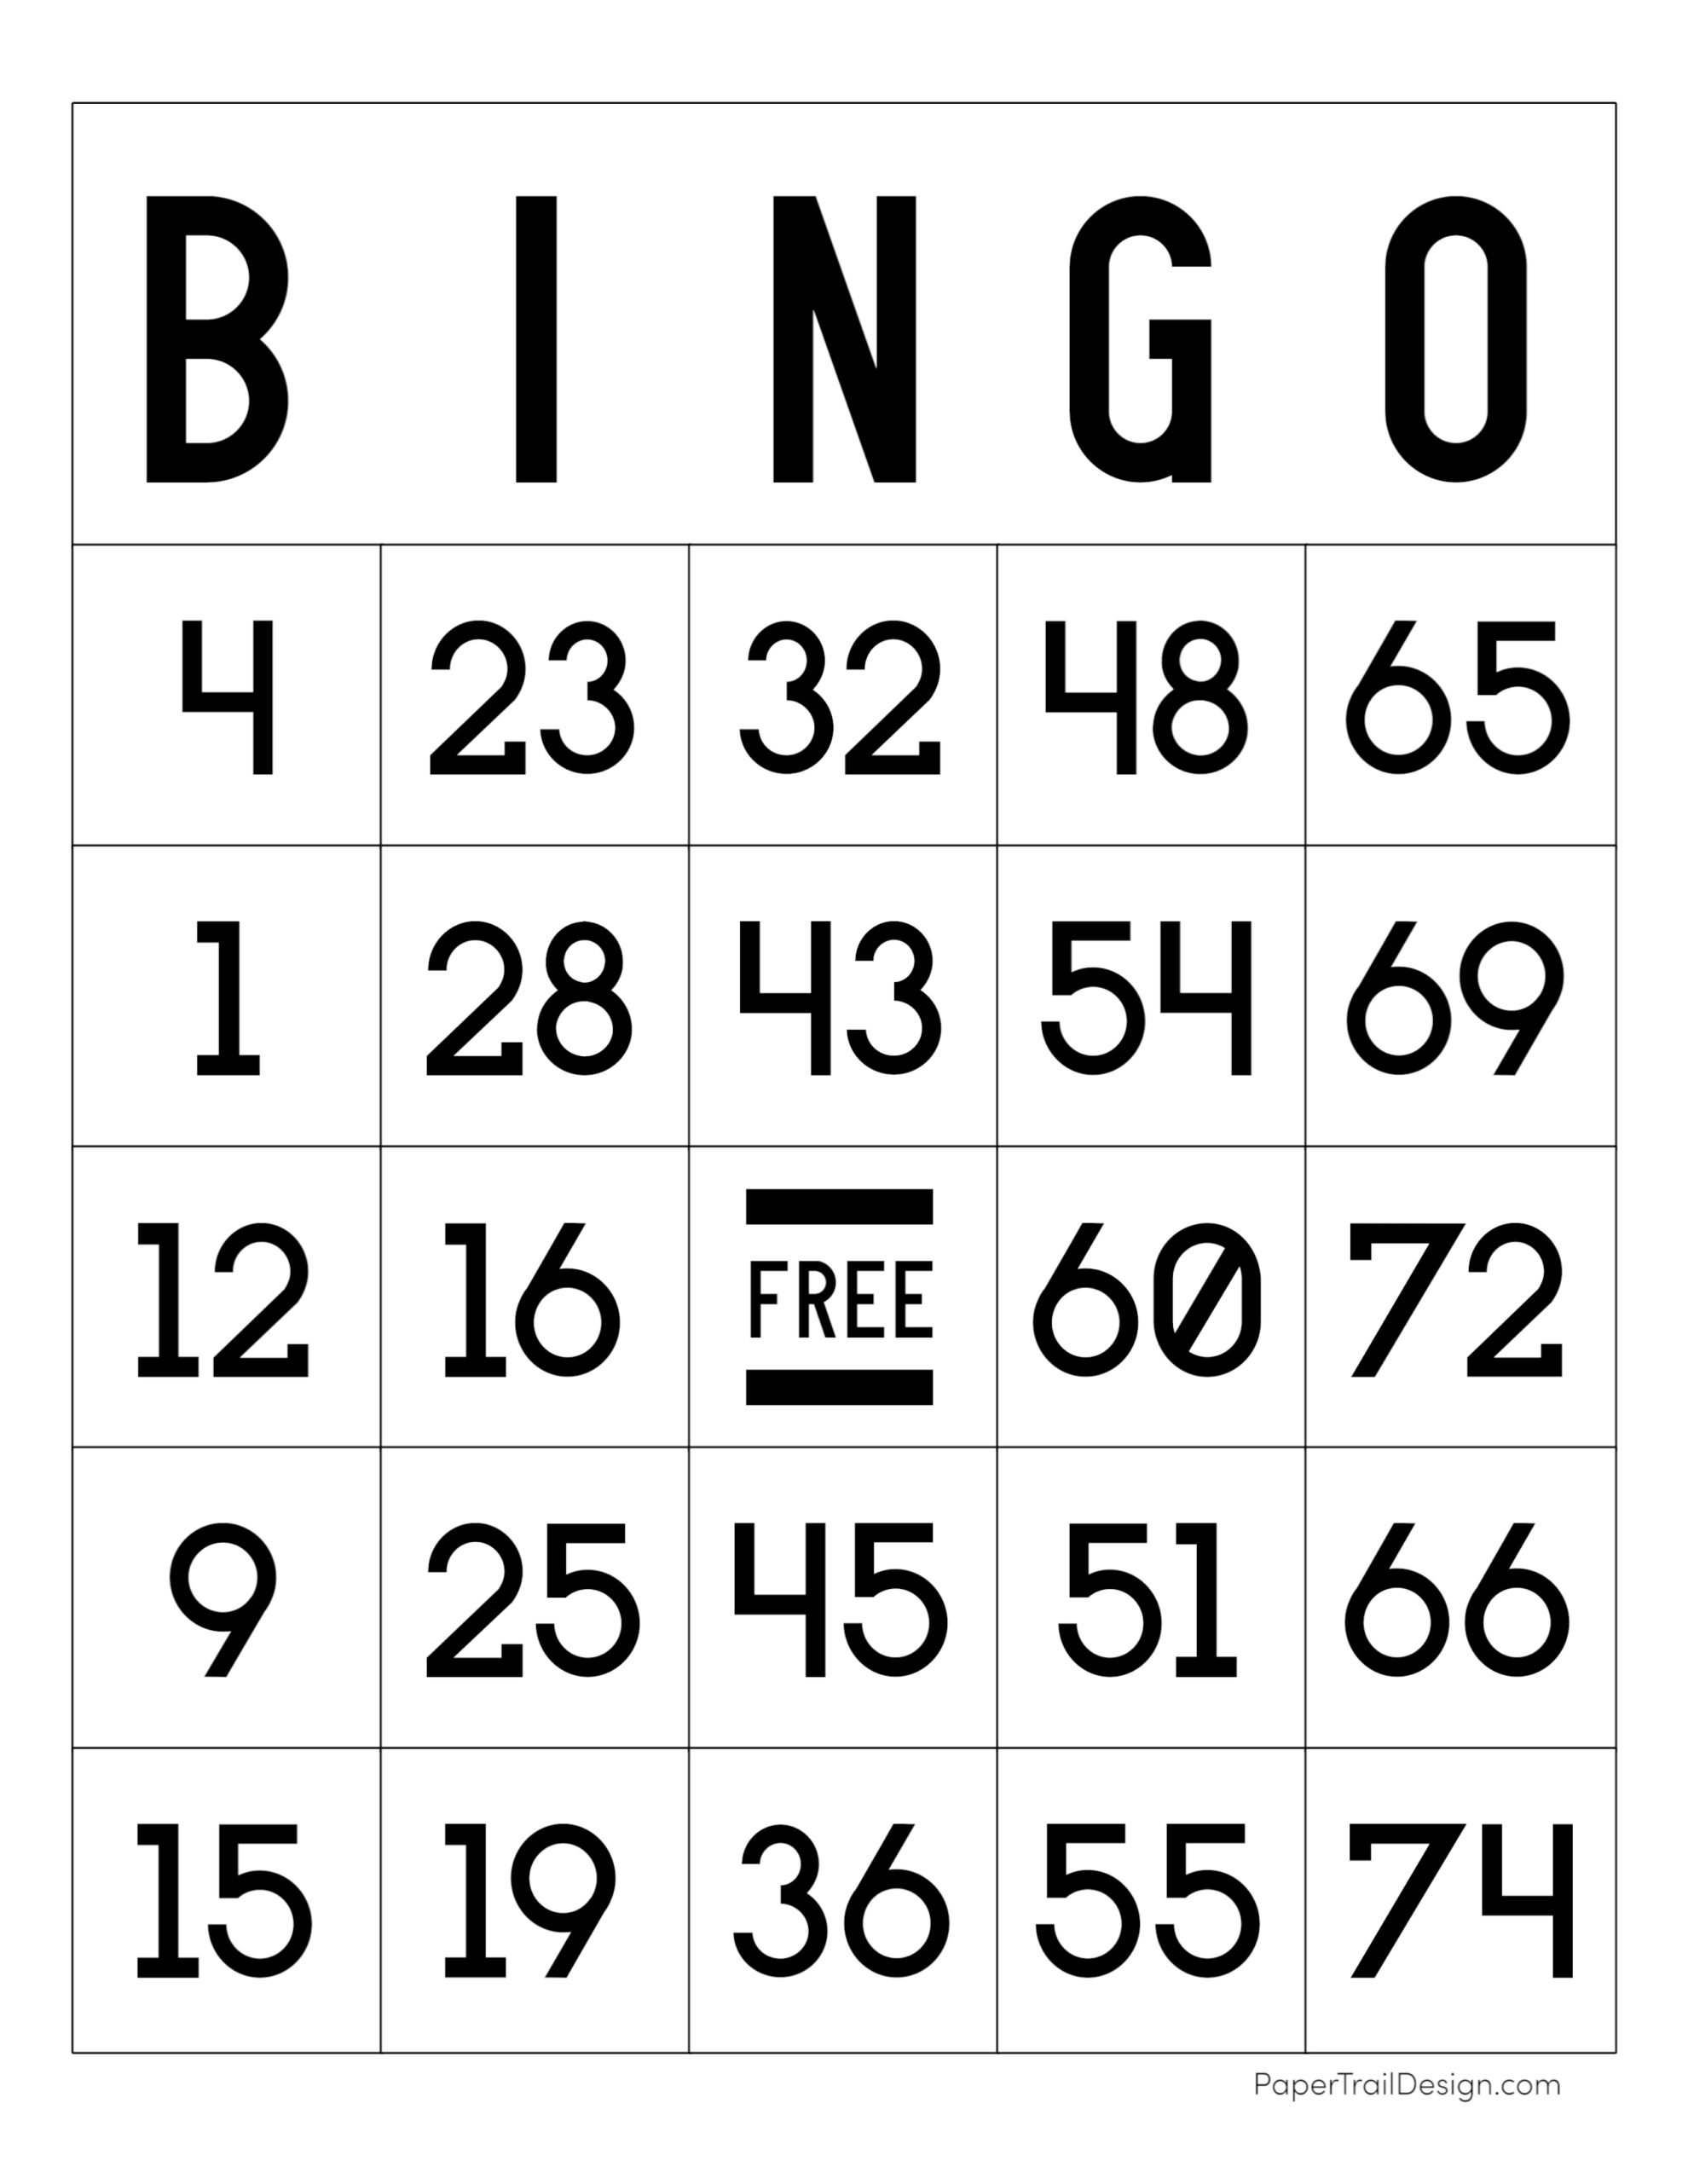 free-printable-bingo-cards-paper-trail-design